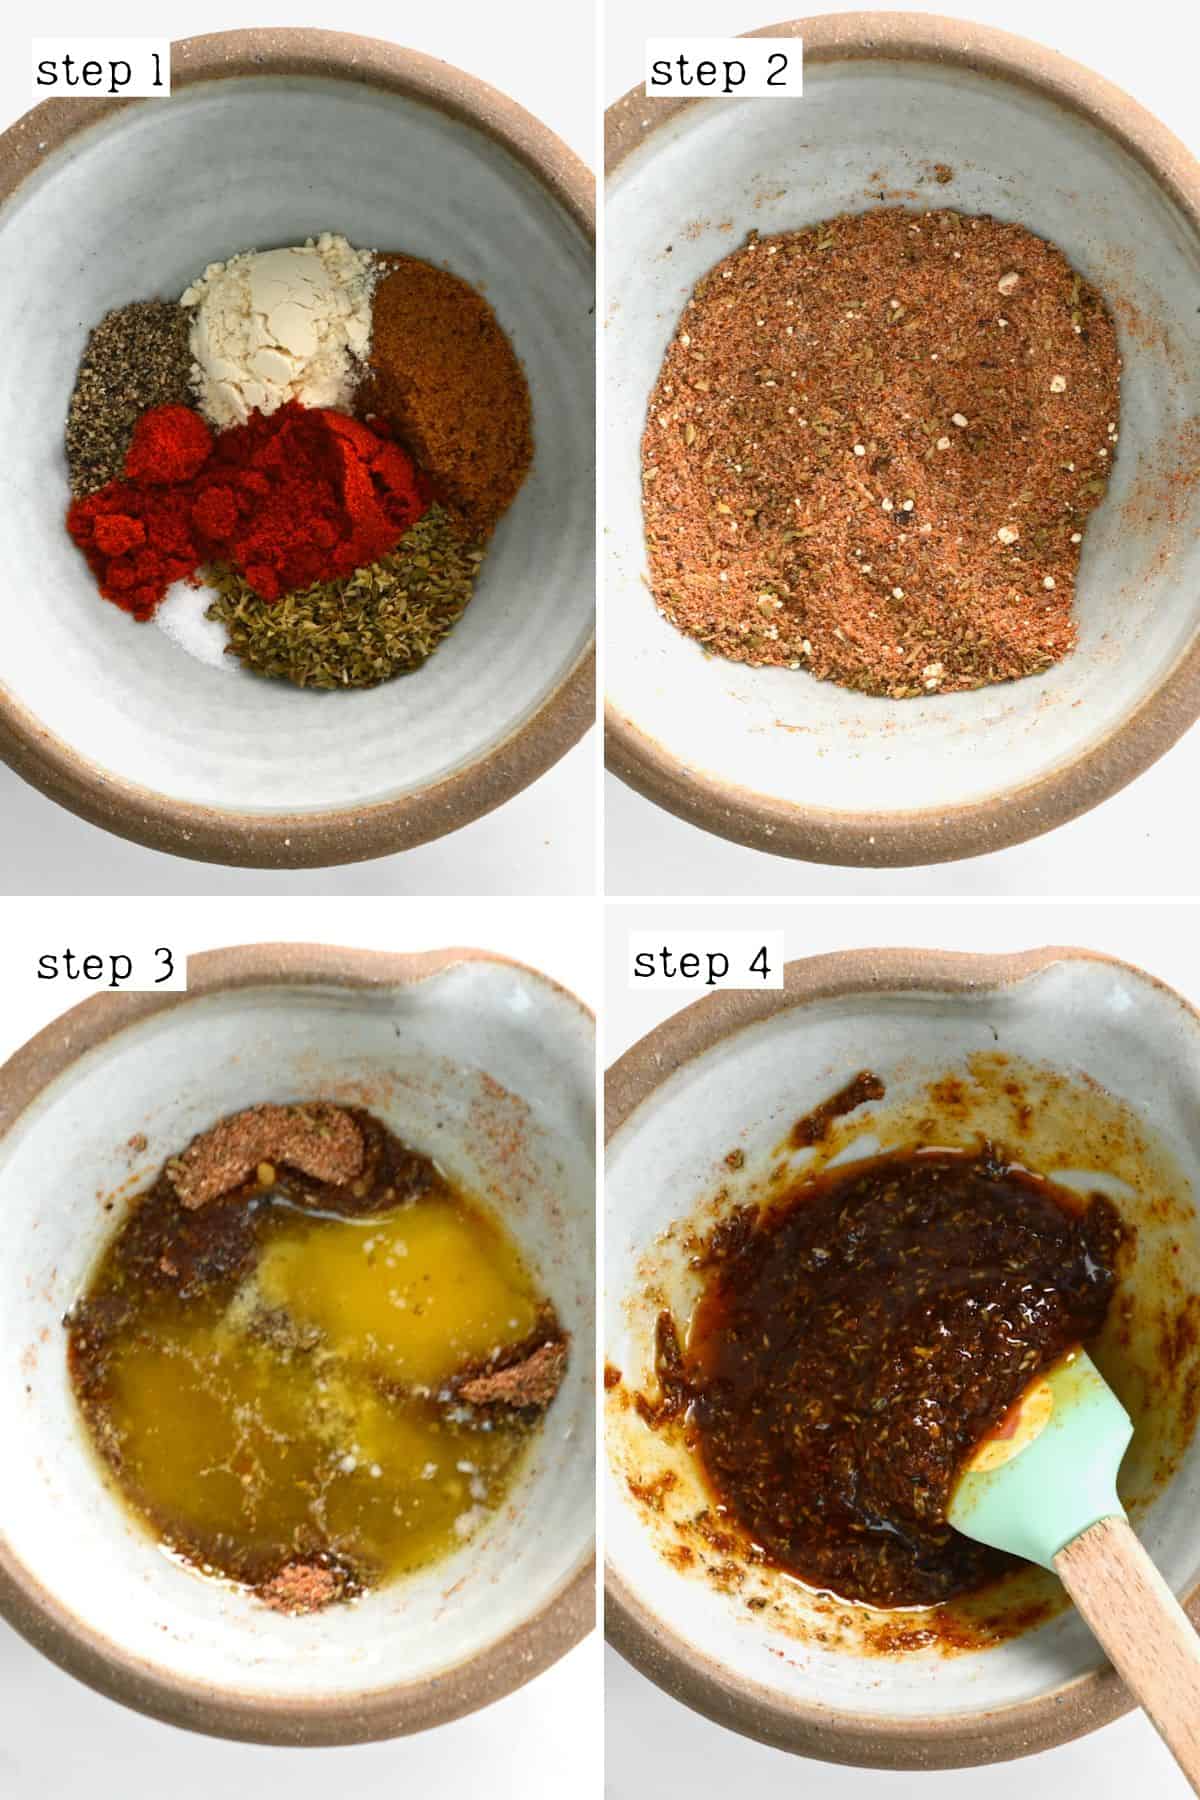 Steps for preparing chicken seasoning